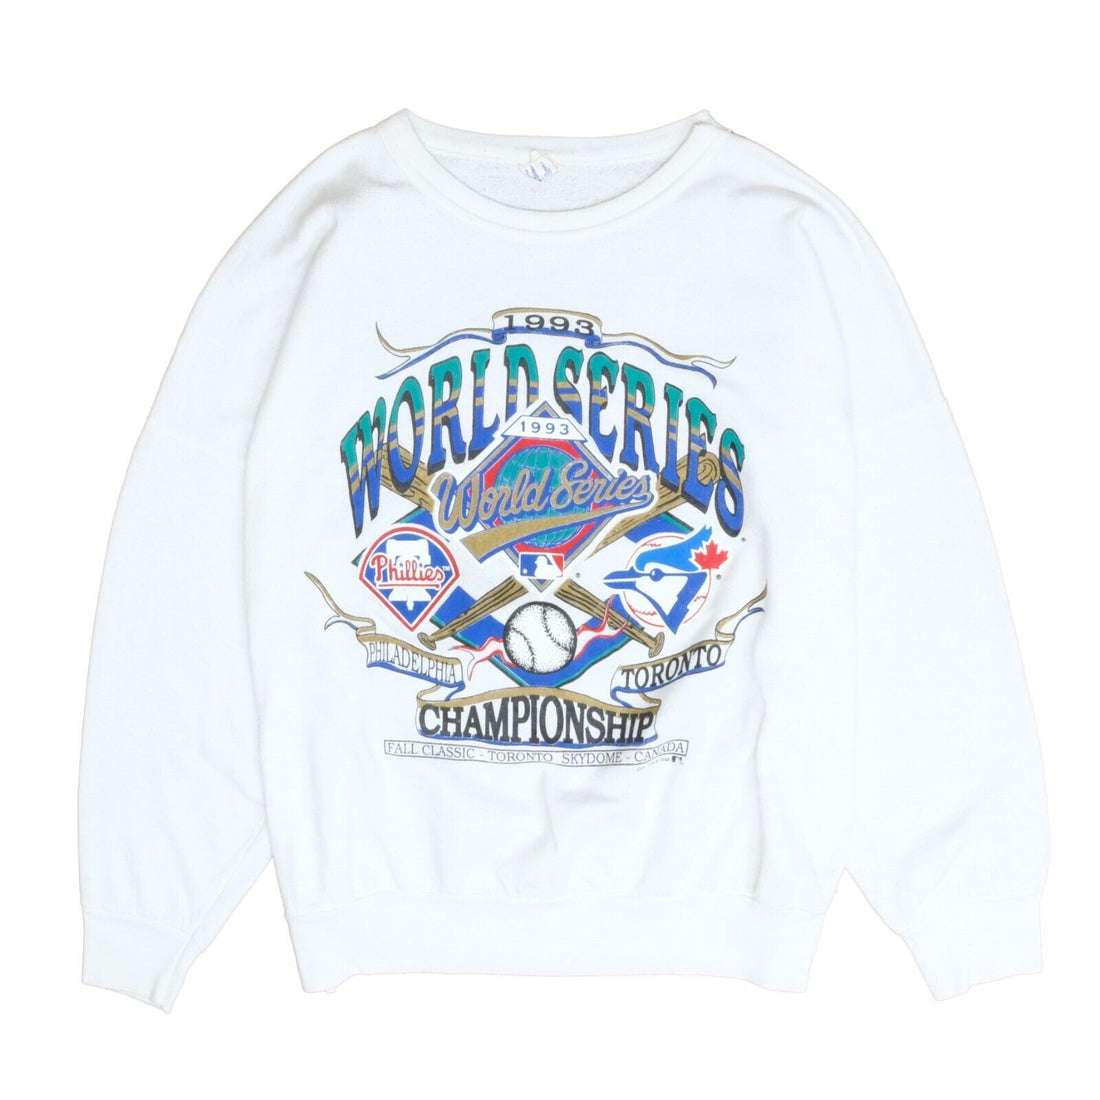 Vintage Toronto Blue Jays 1993 World Series Champions MLB Baseball Shirt  Mens L